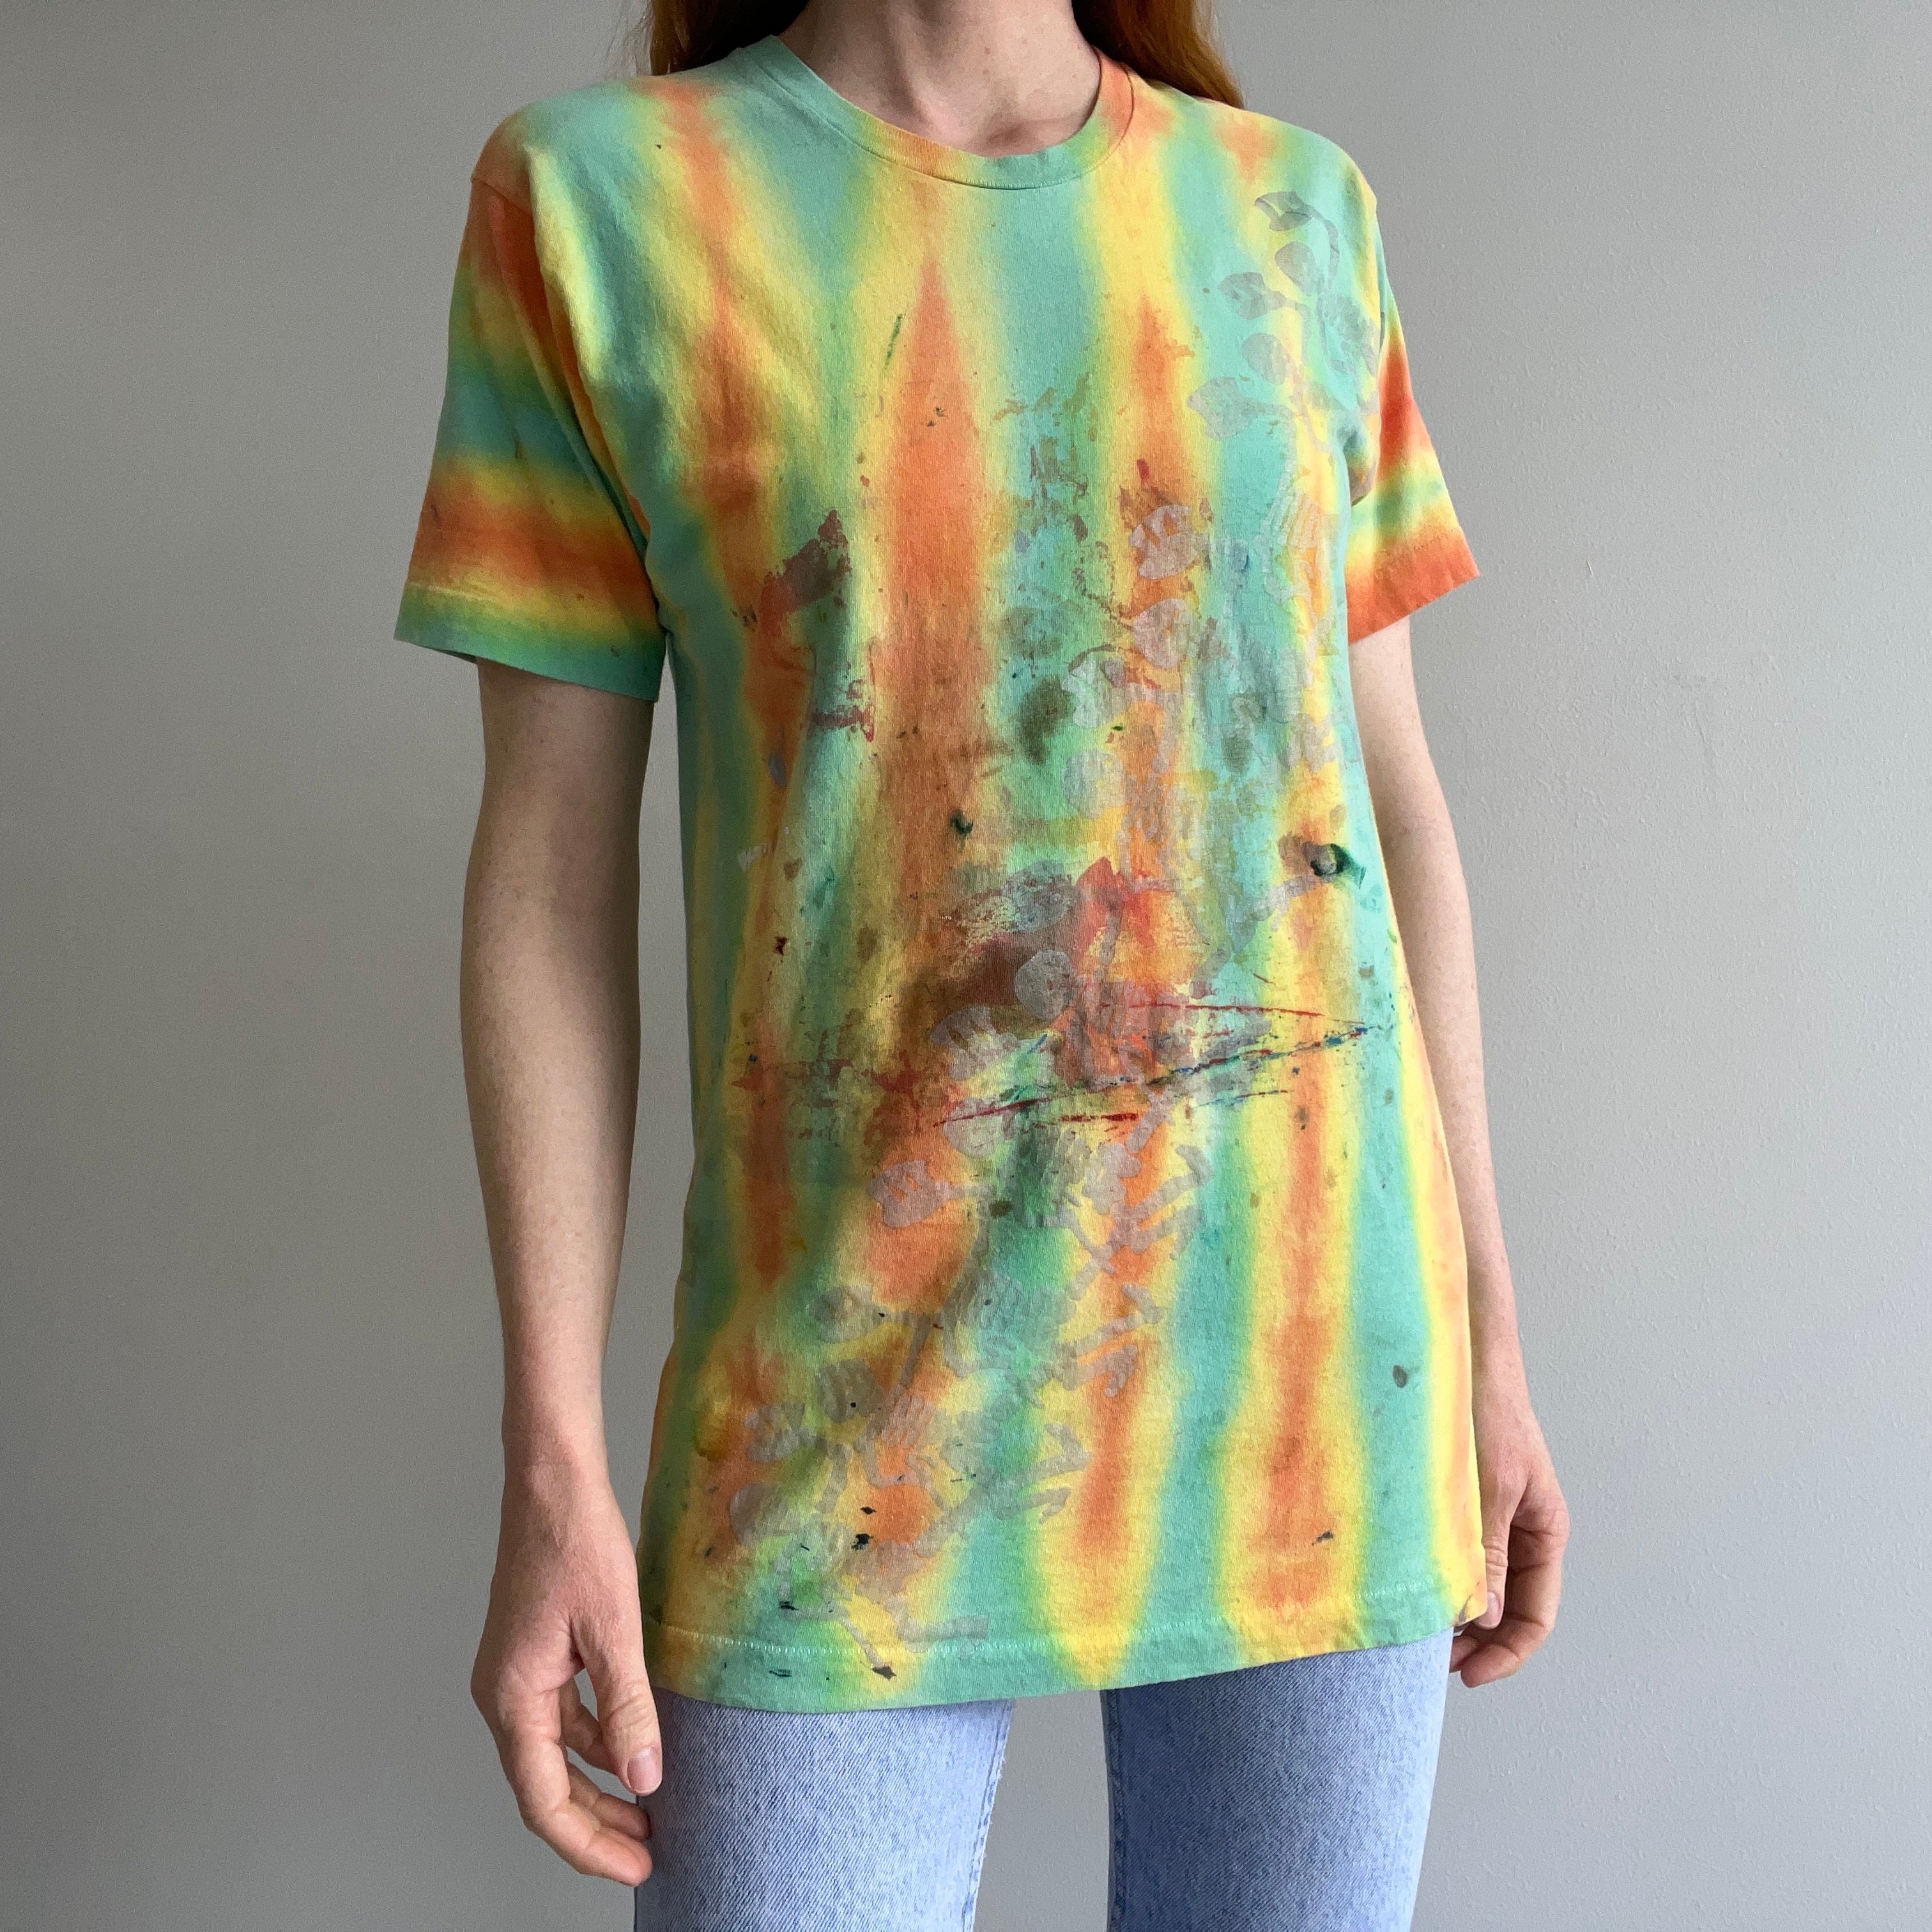 1980s Grateful Dead Super Paint Stained Tie Dye T-Shirt on a FOTL Single Stitch